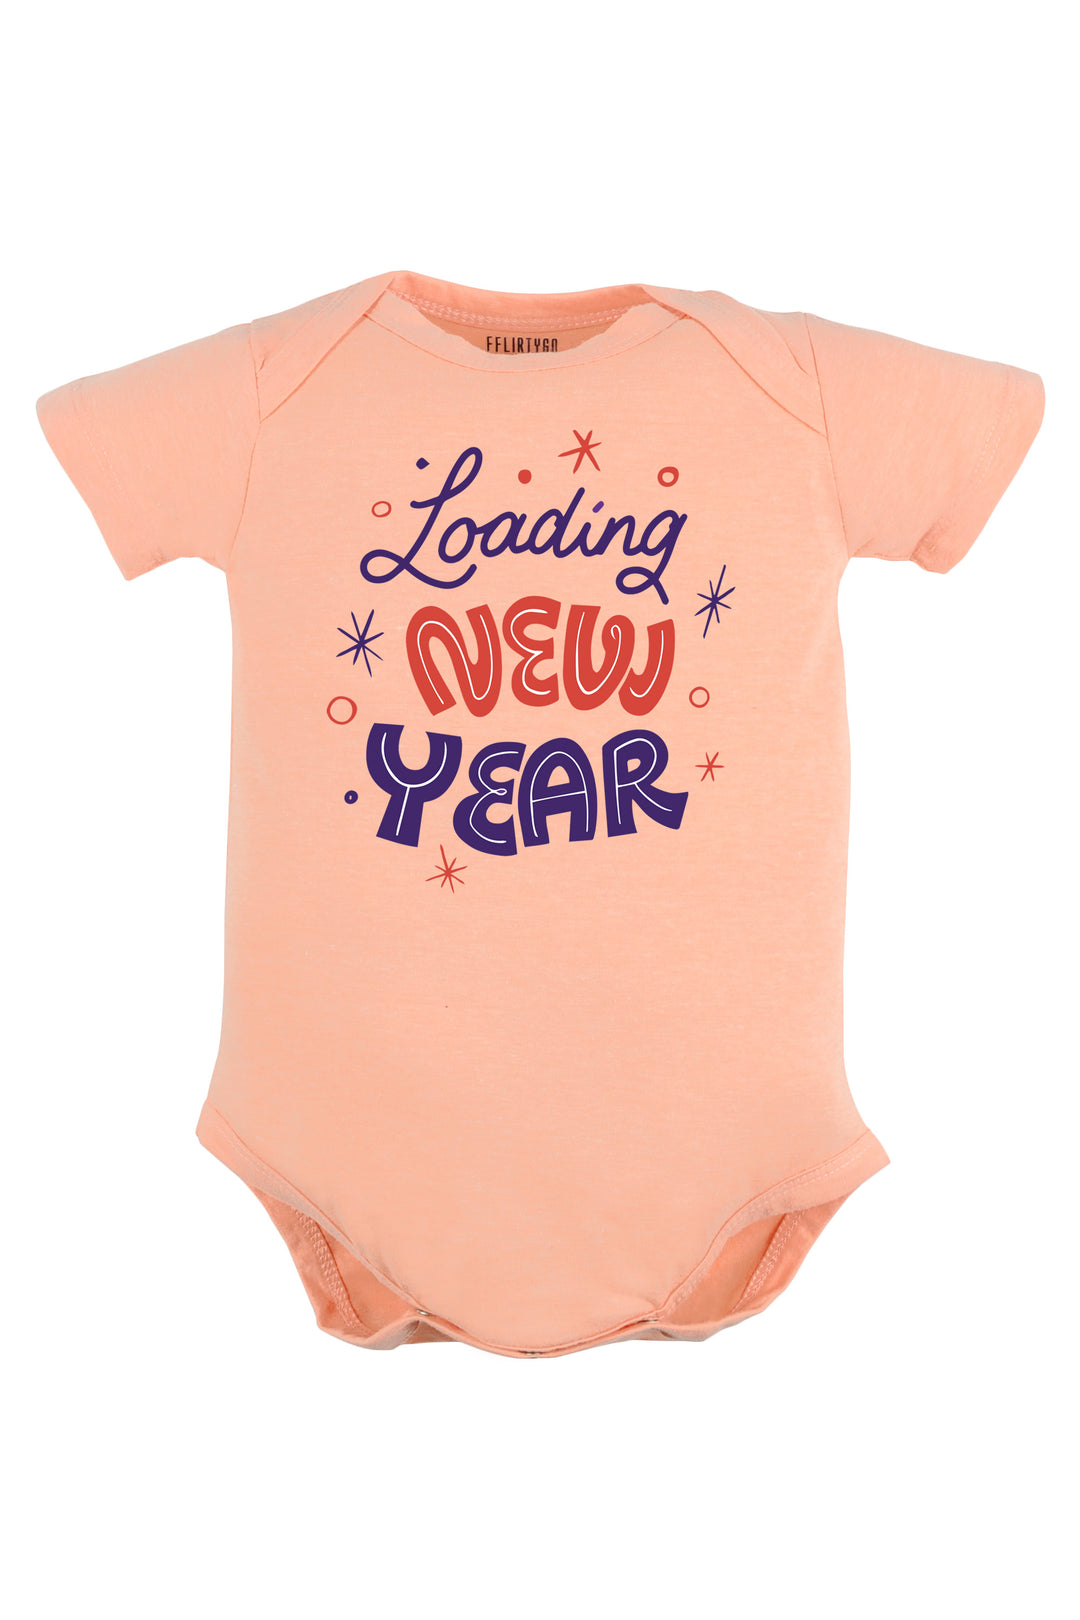 Loading New Year Baby Romper | Onesies